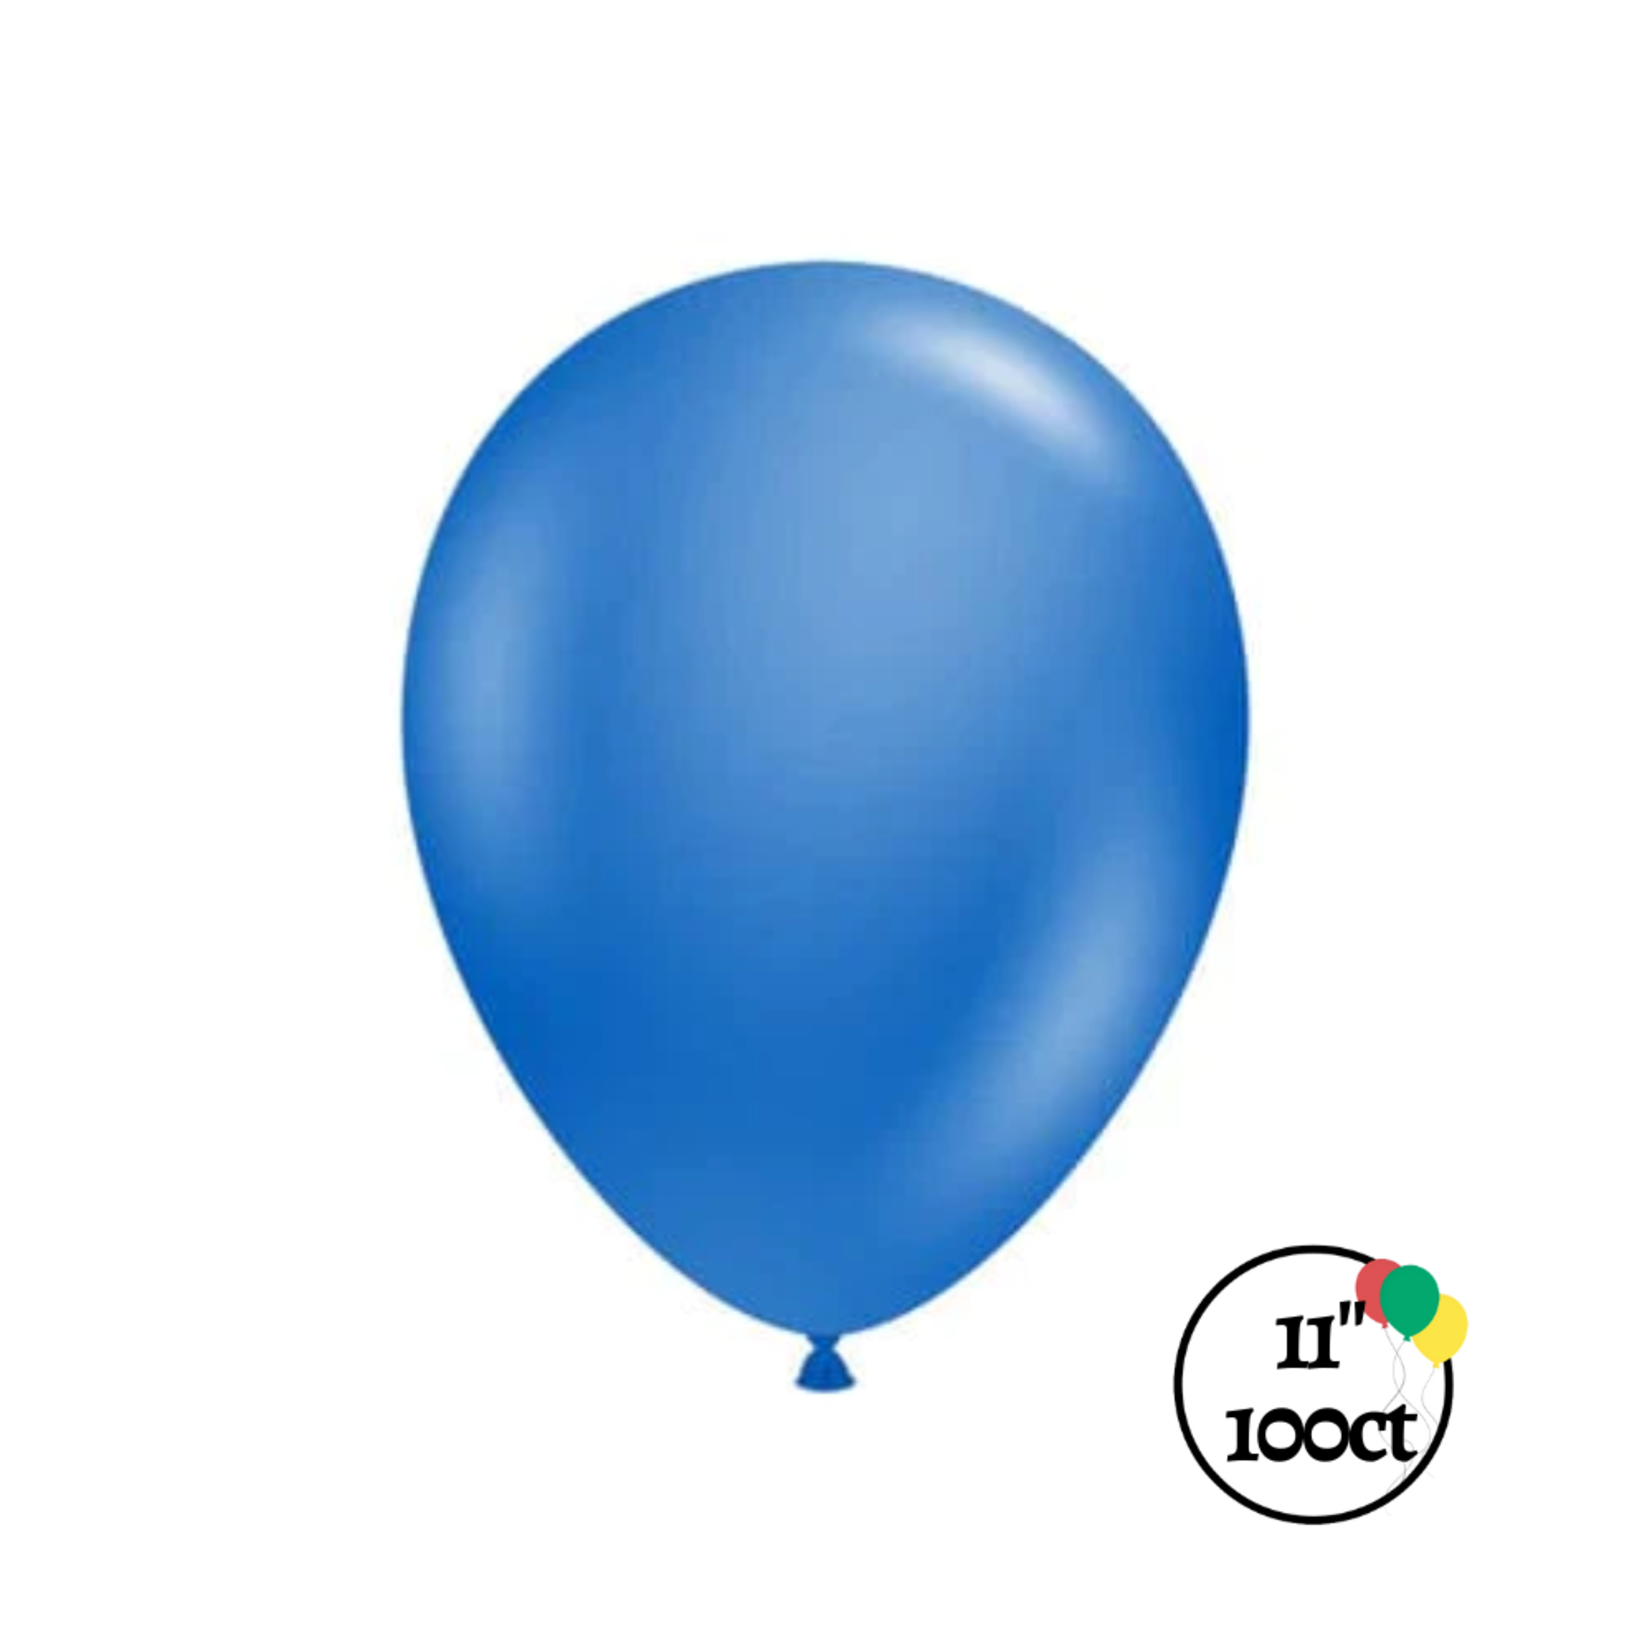 Tuftex 11" Tuftex Metallic Blue Balloon 100ct